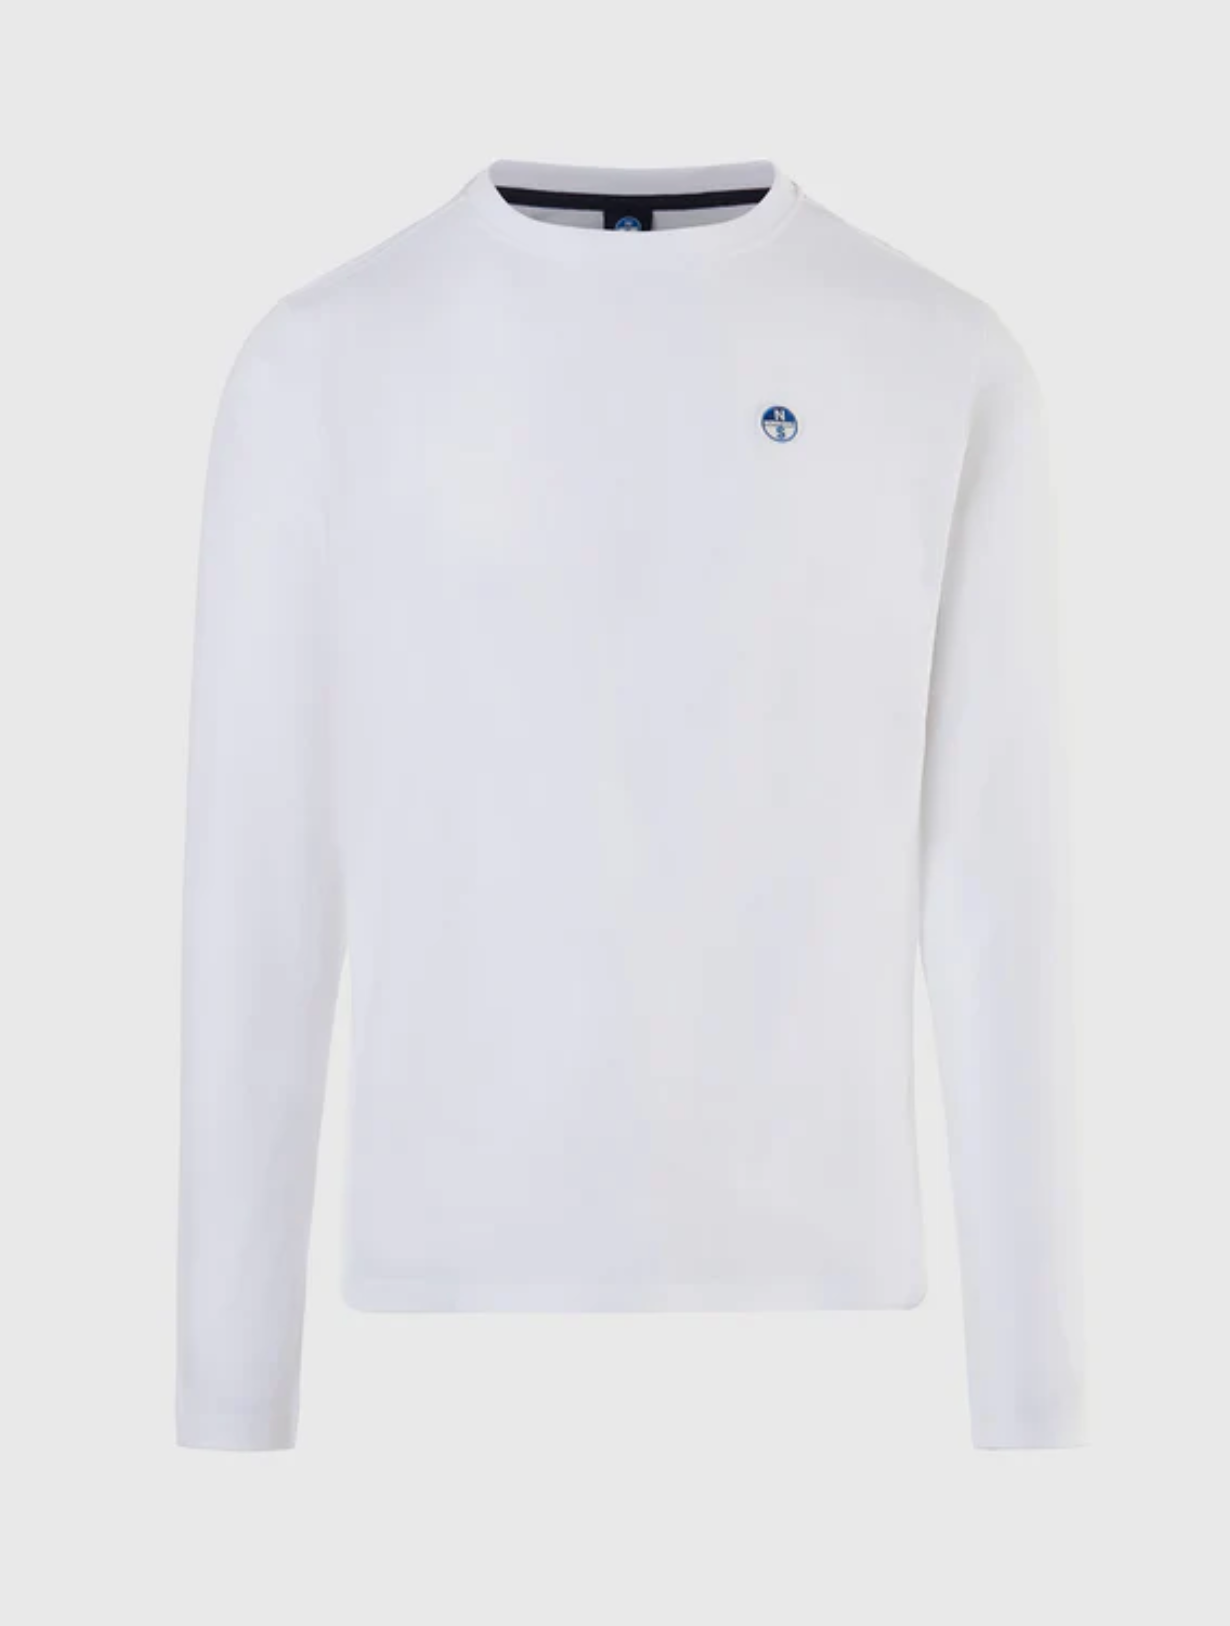 North Sails New Logo Long Sleeve T-Shirt White